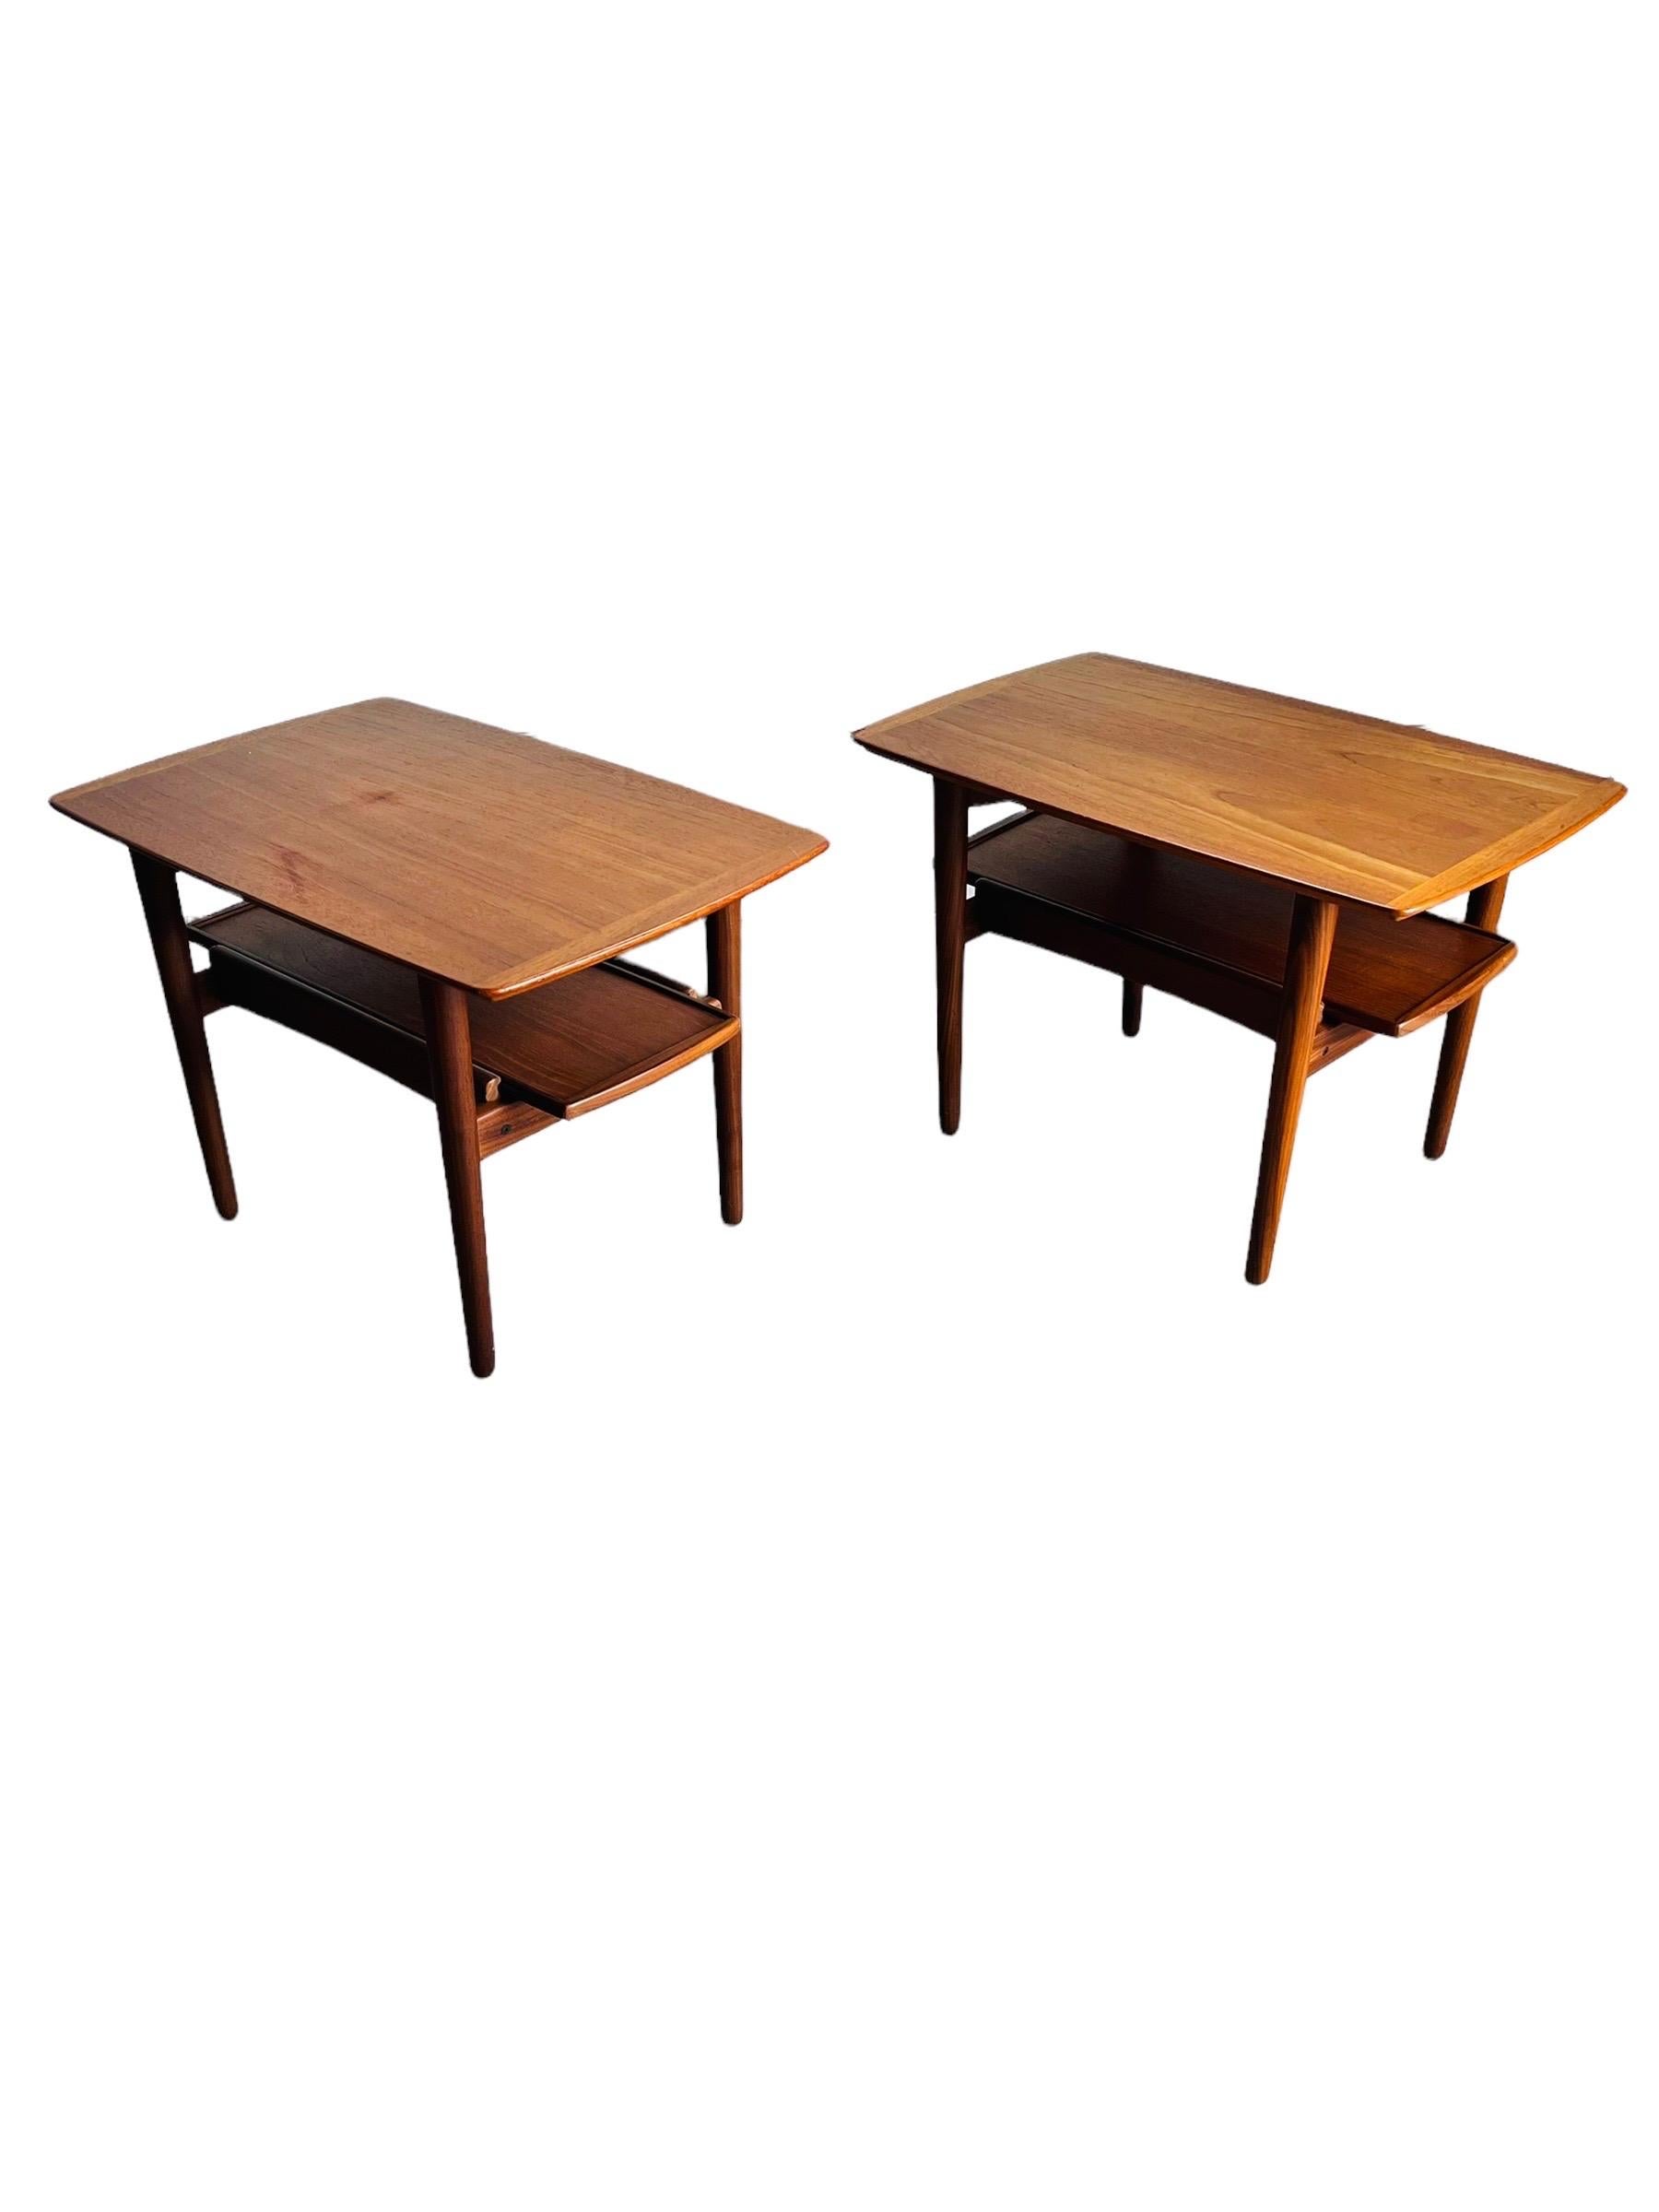 20th Century Pair Danish Modern Teak End Tables by Bramin Mobler